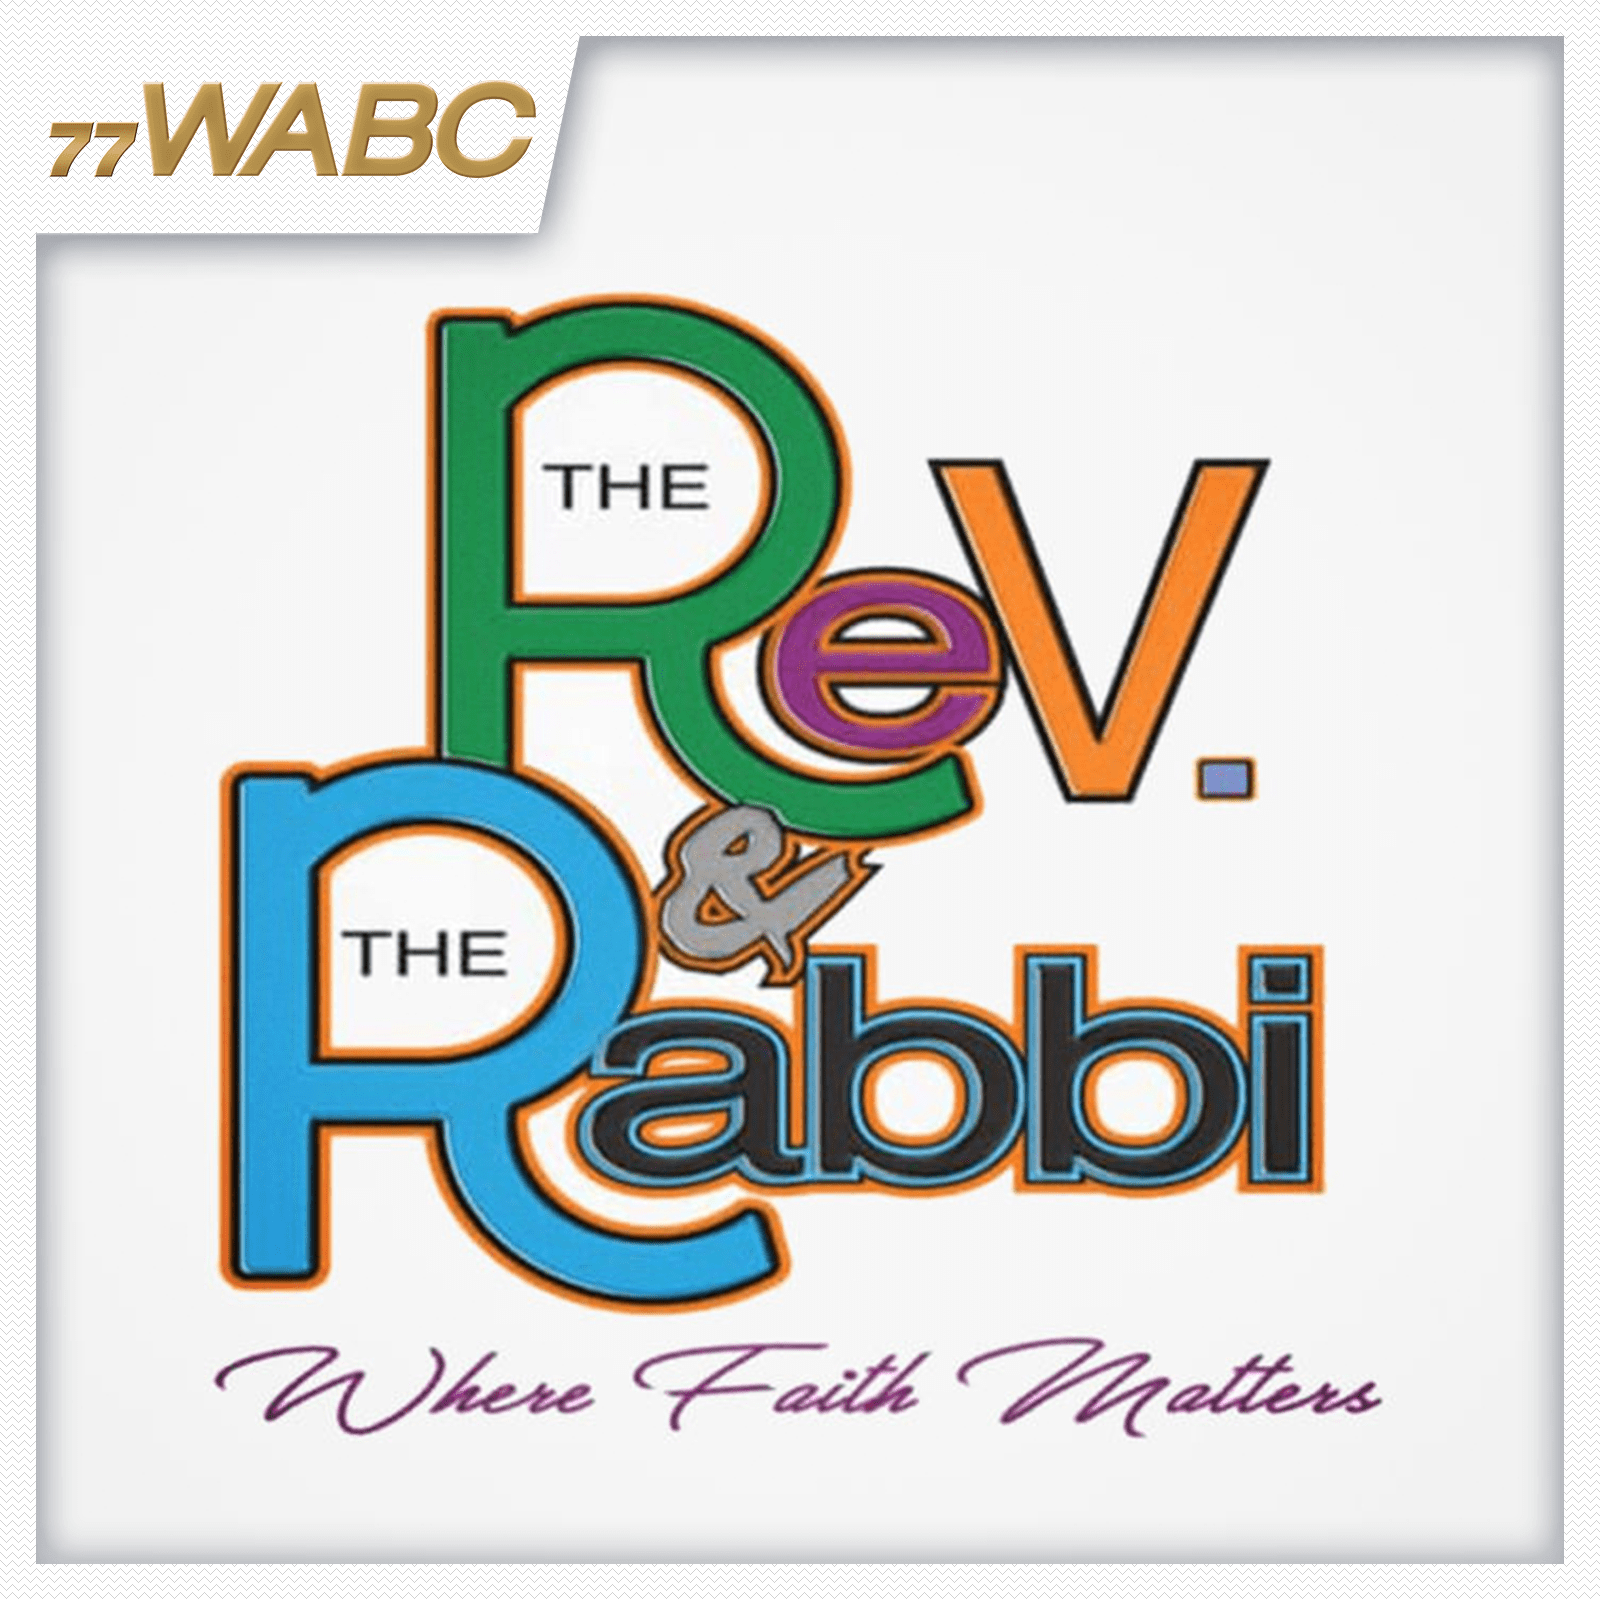 rev-and-the-rabbi-new-logo929523